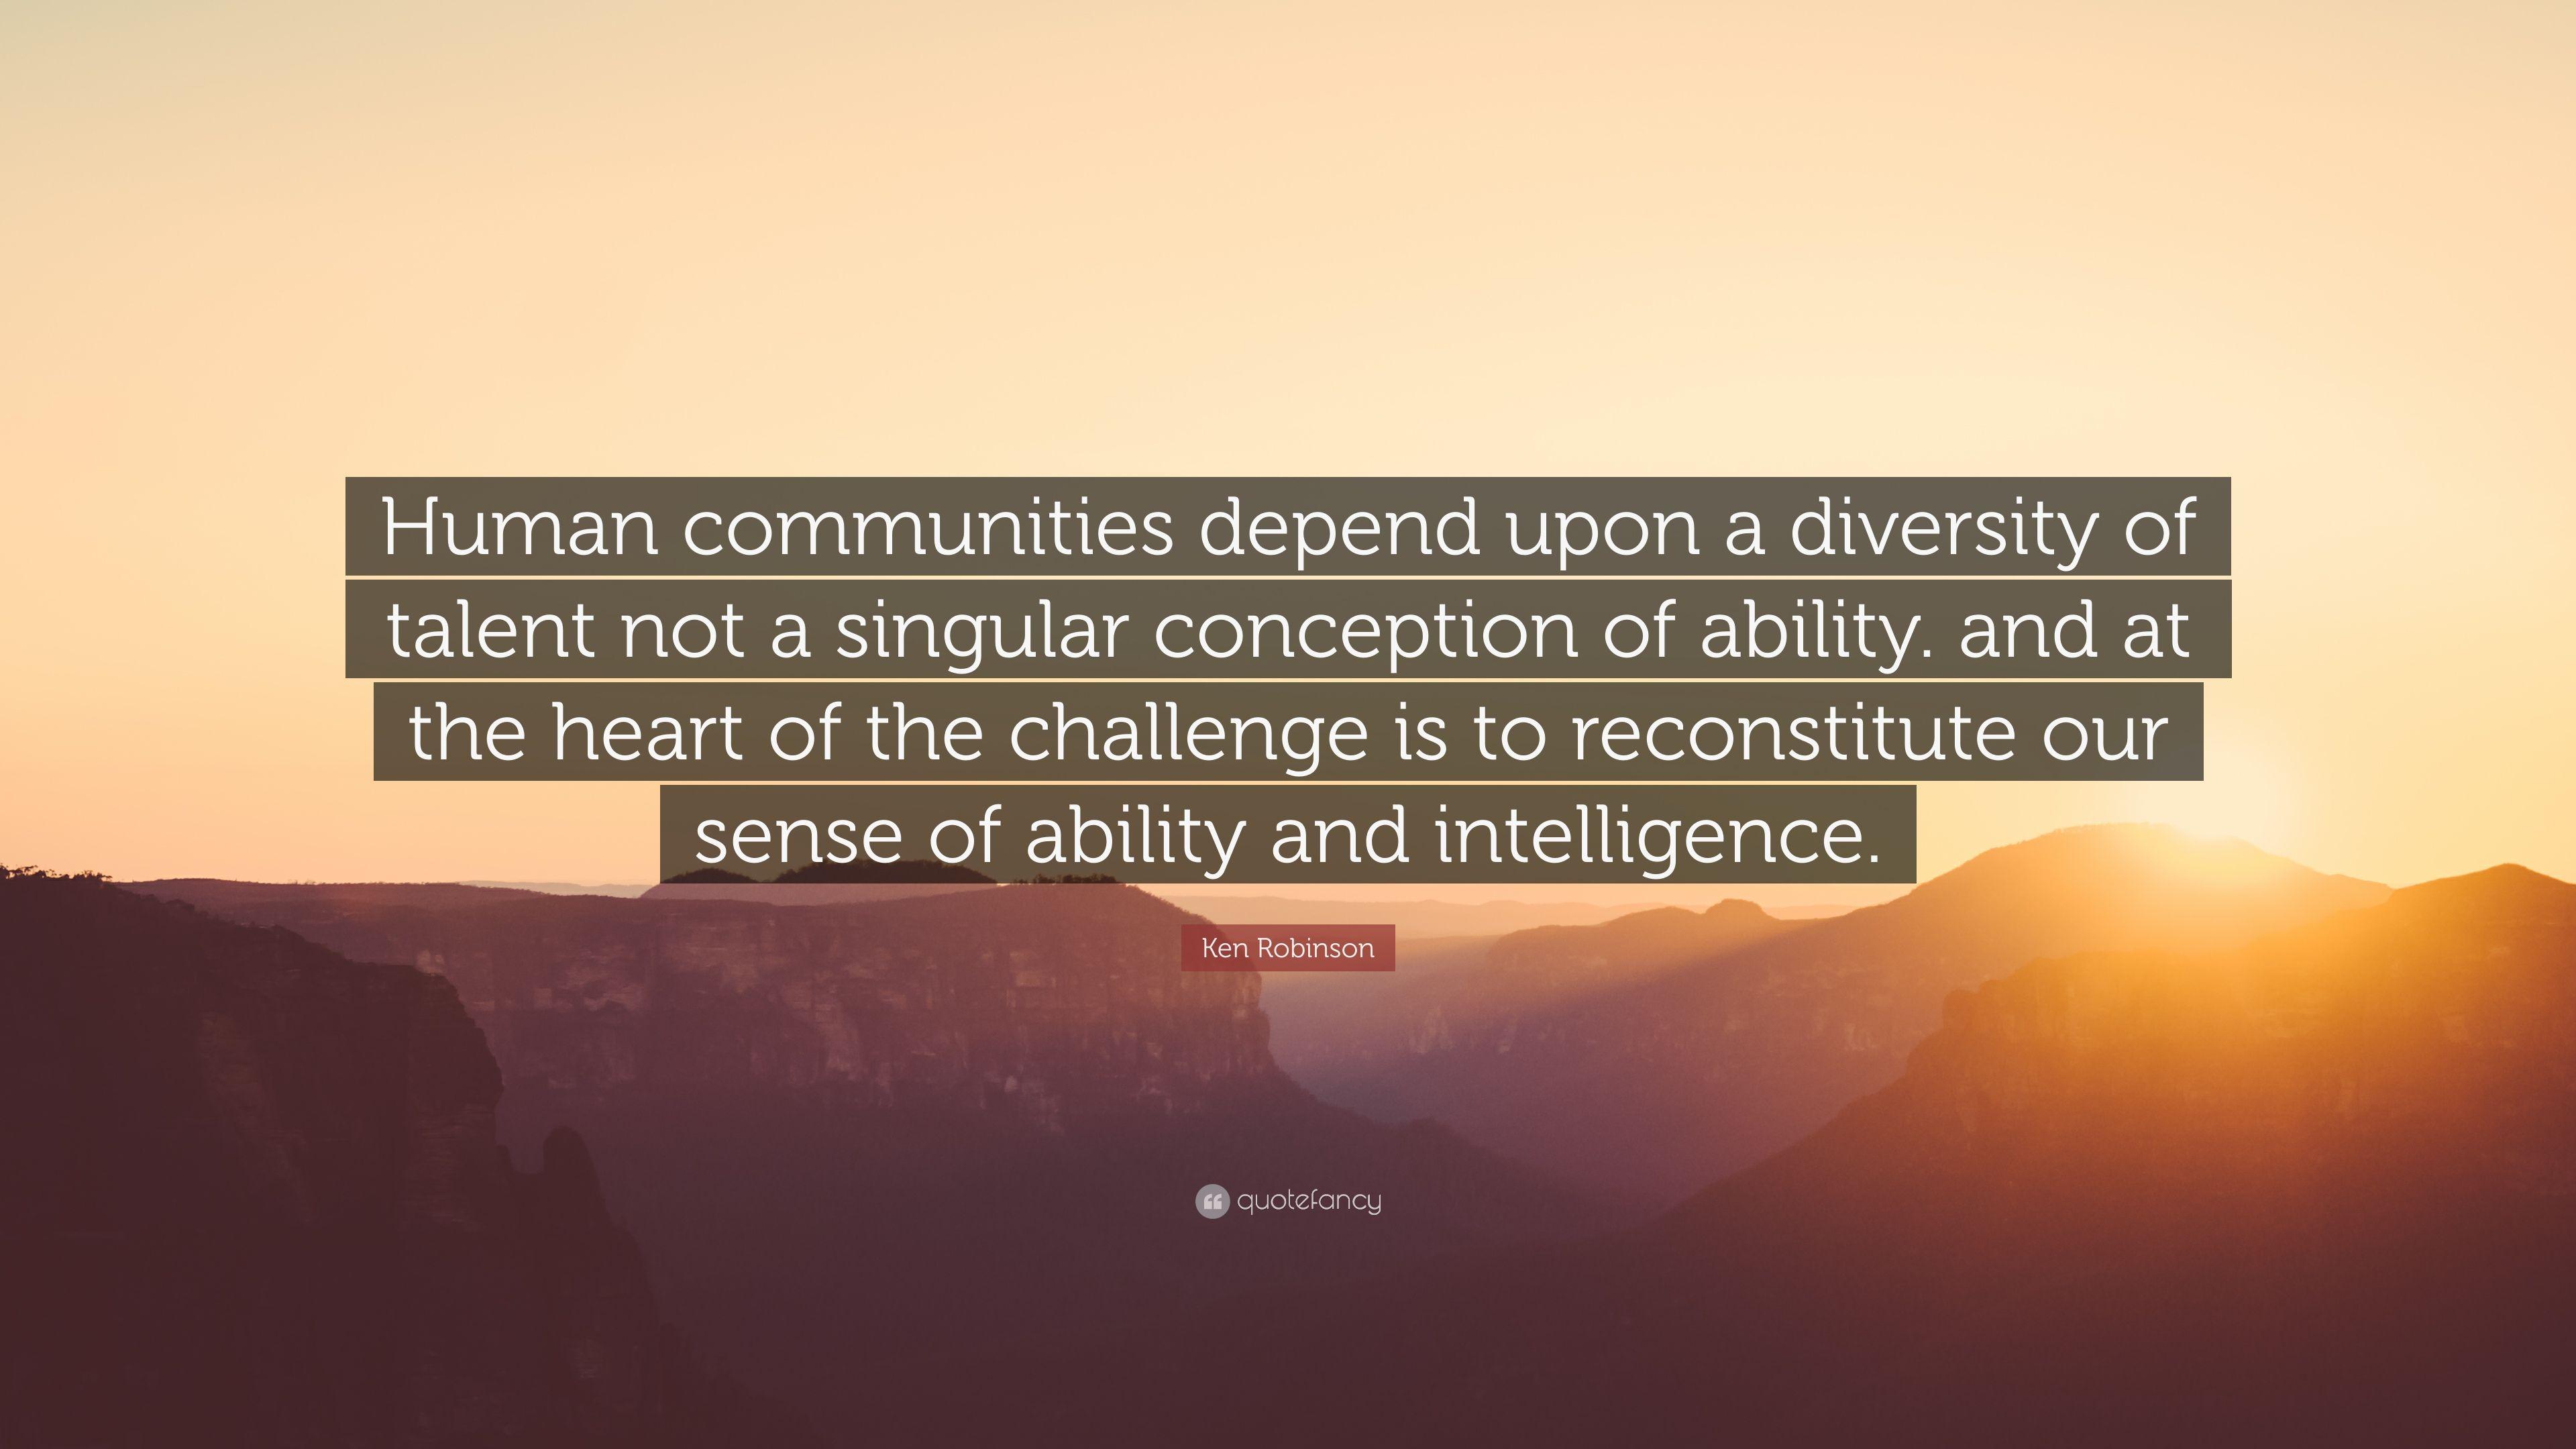 Ken Robinson Quote: “Human communities depend upon a diversity